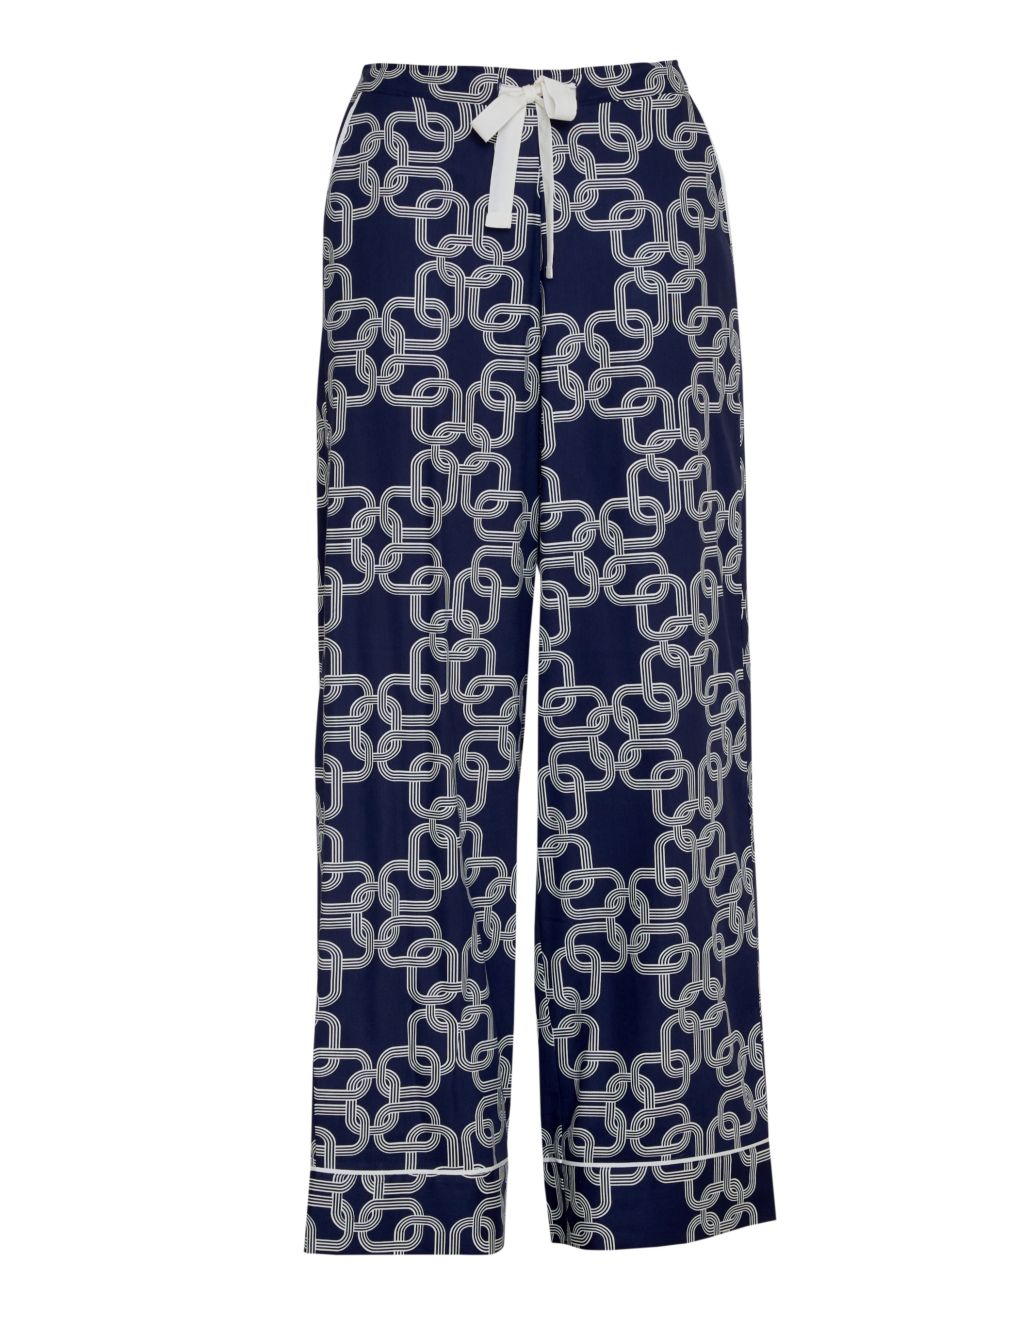 Cotton Modal Chain Print Pyjama Bottoms image 2